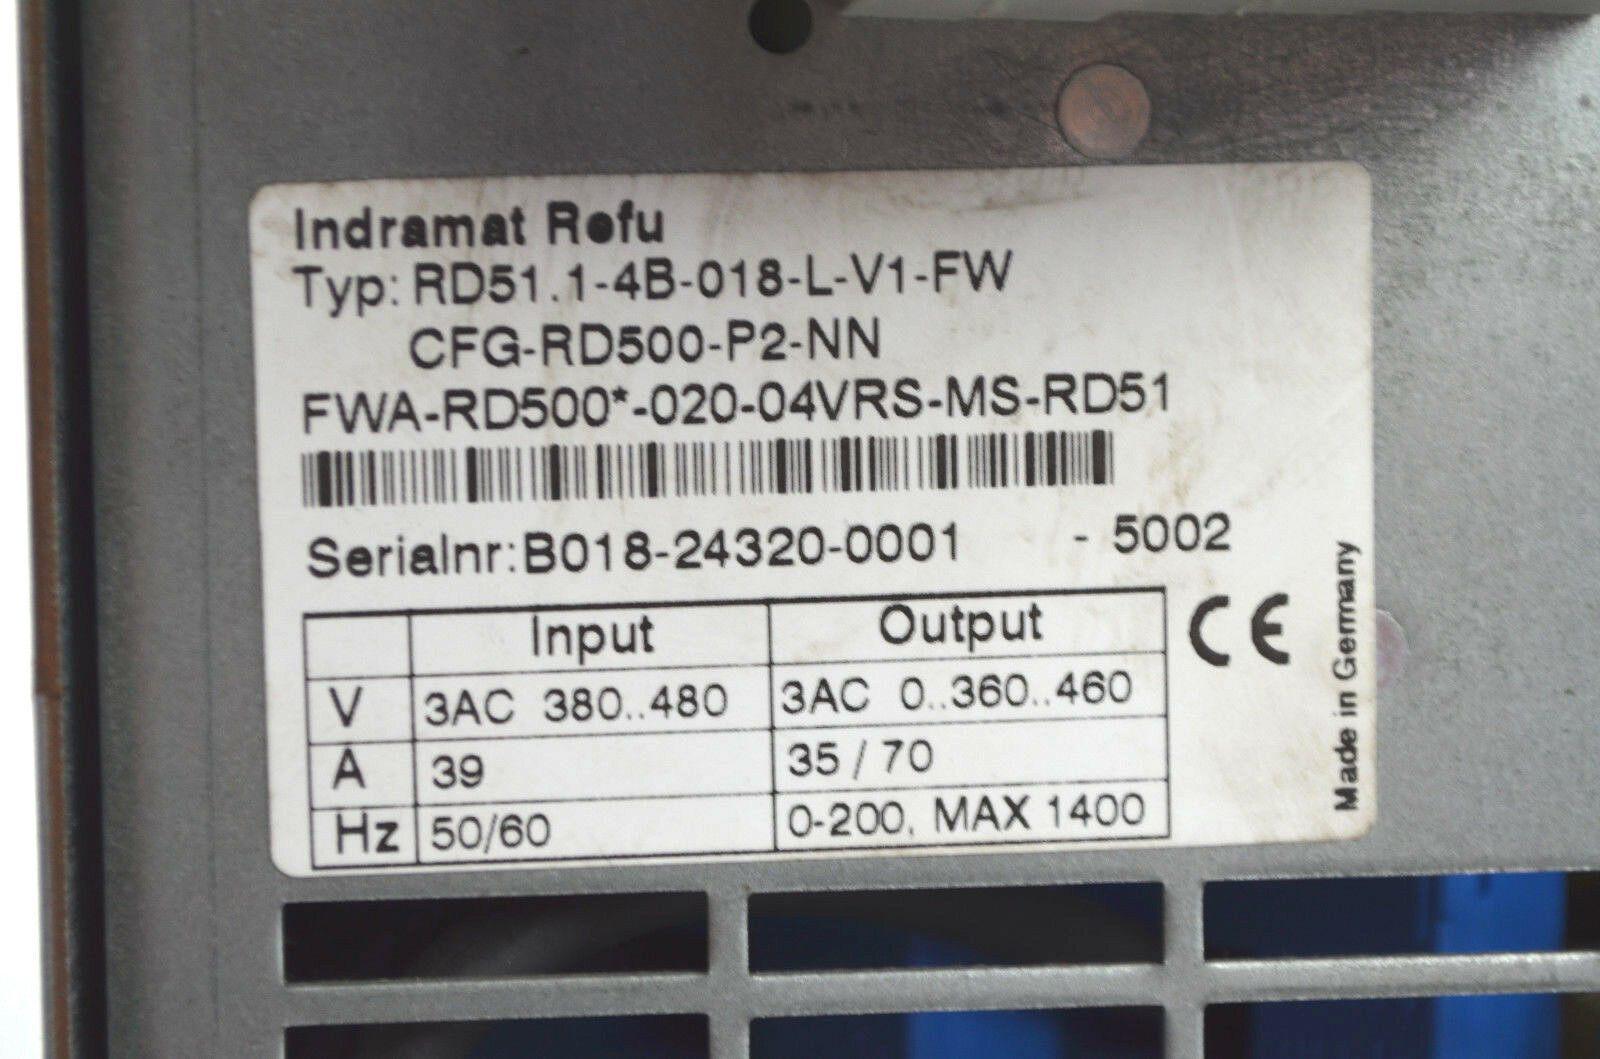 Indramat Refu RD51.1-4B-018-L-V1-FWCFG-RD500-P2-NNFWA-RD500*-020-04VRS-MSRD51